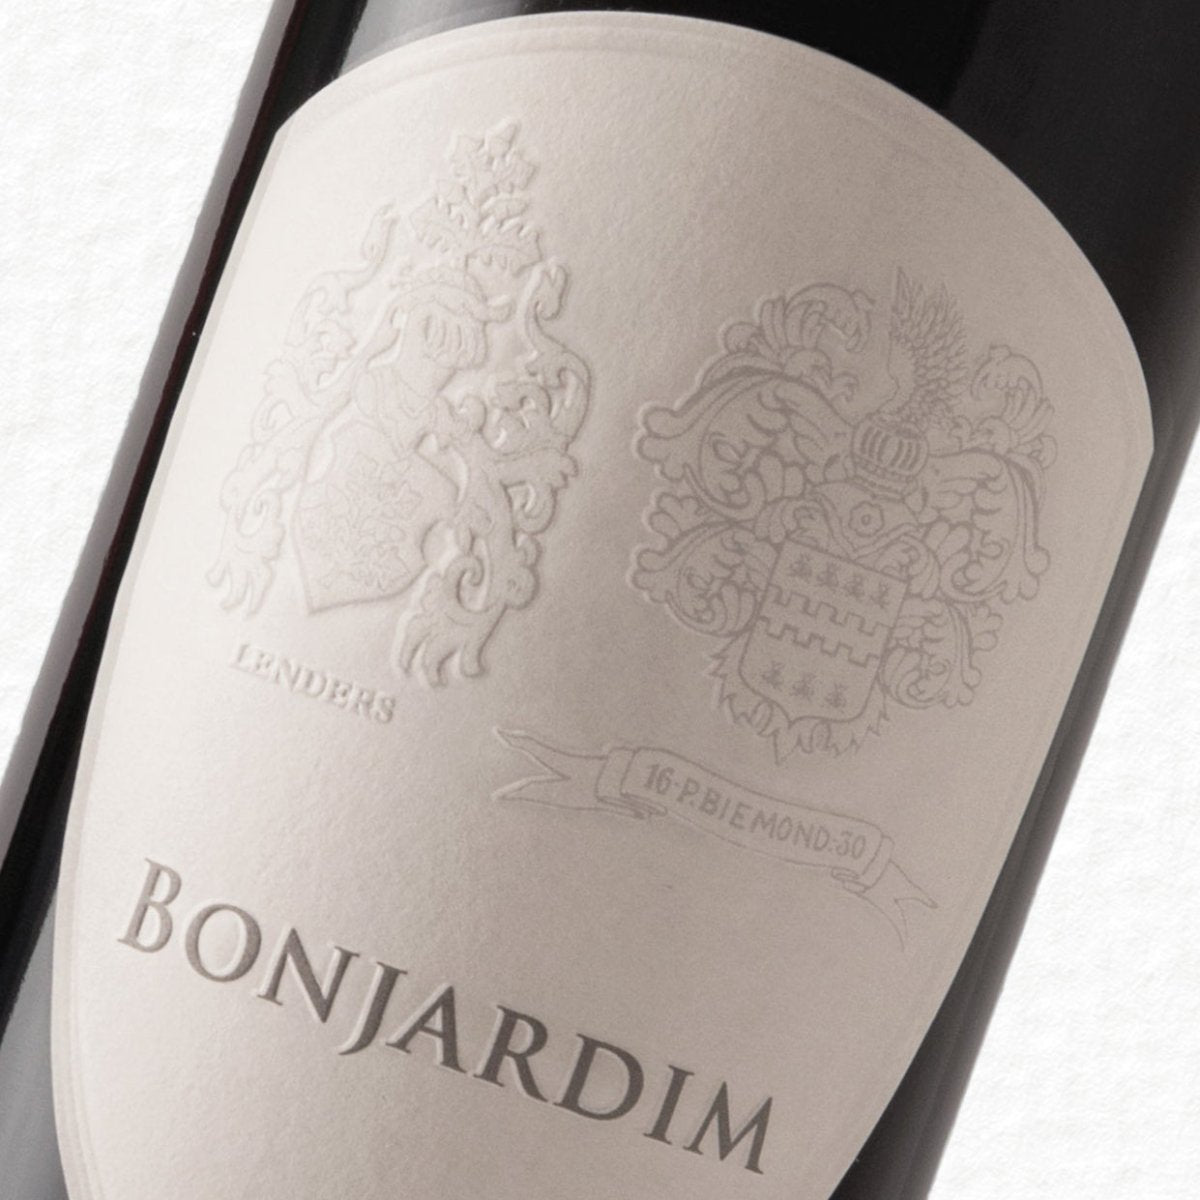 Bonjardim Red 2017 - Bonjardim Wines- Red Wine